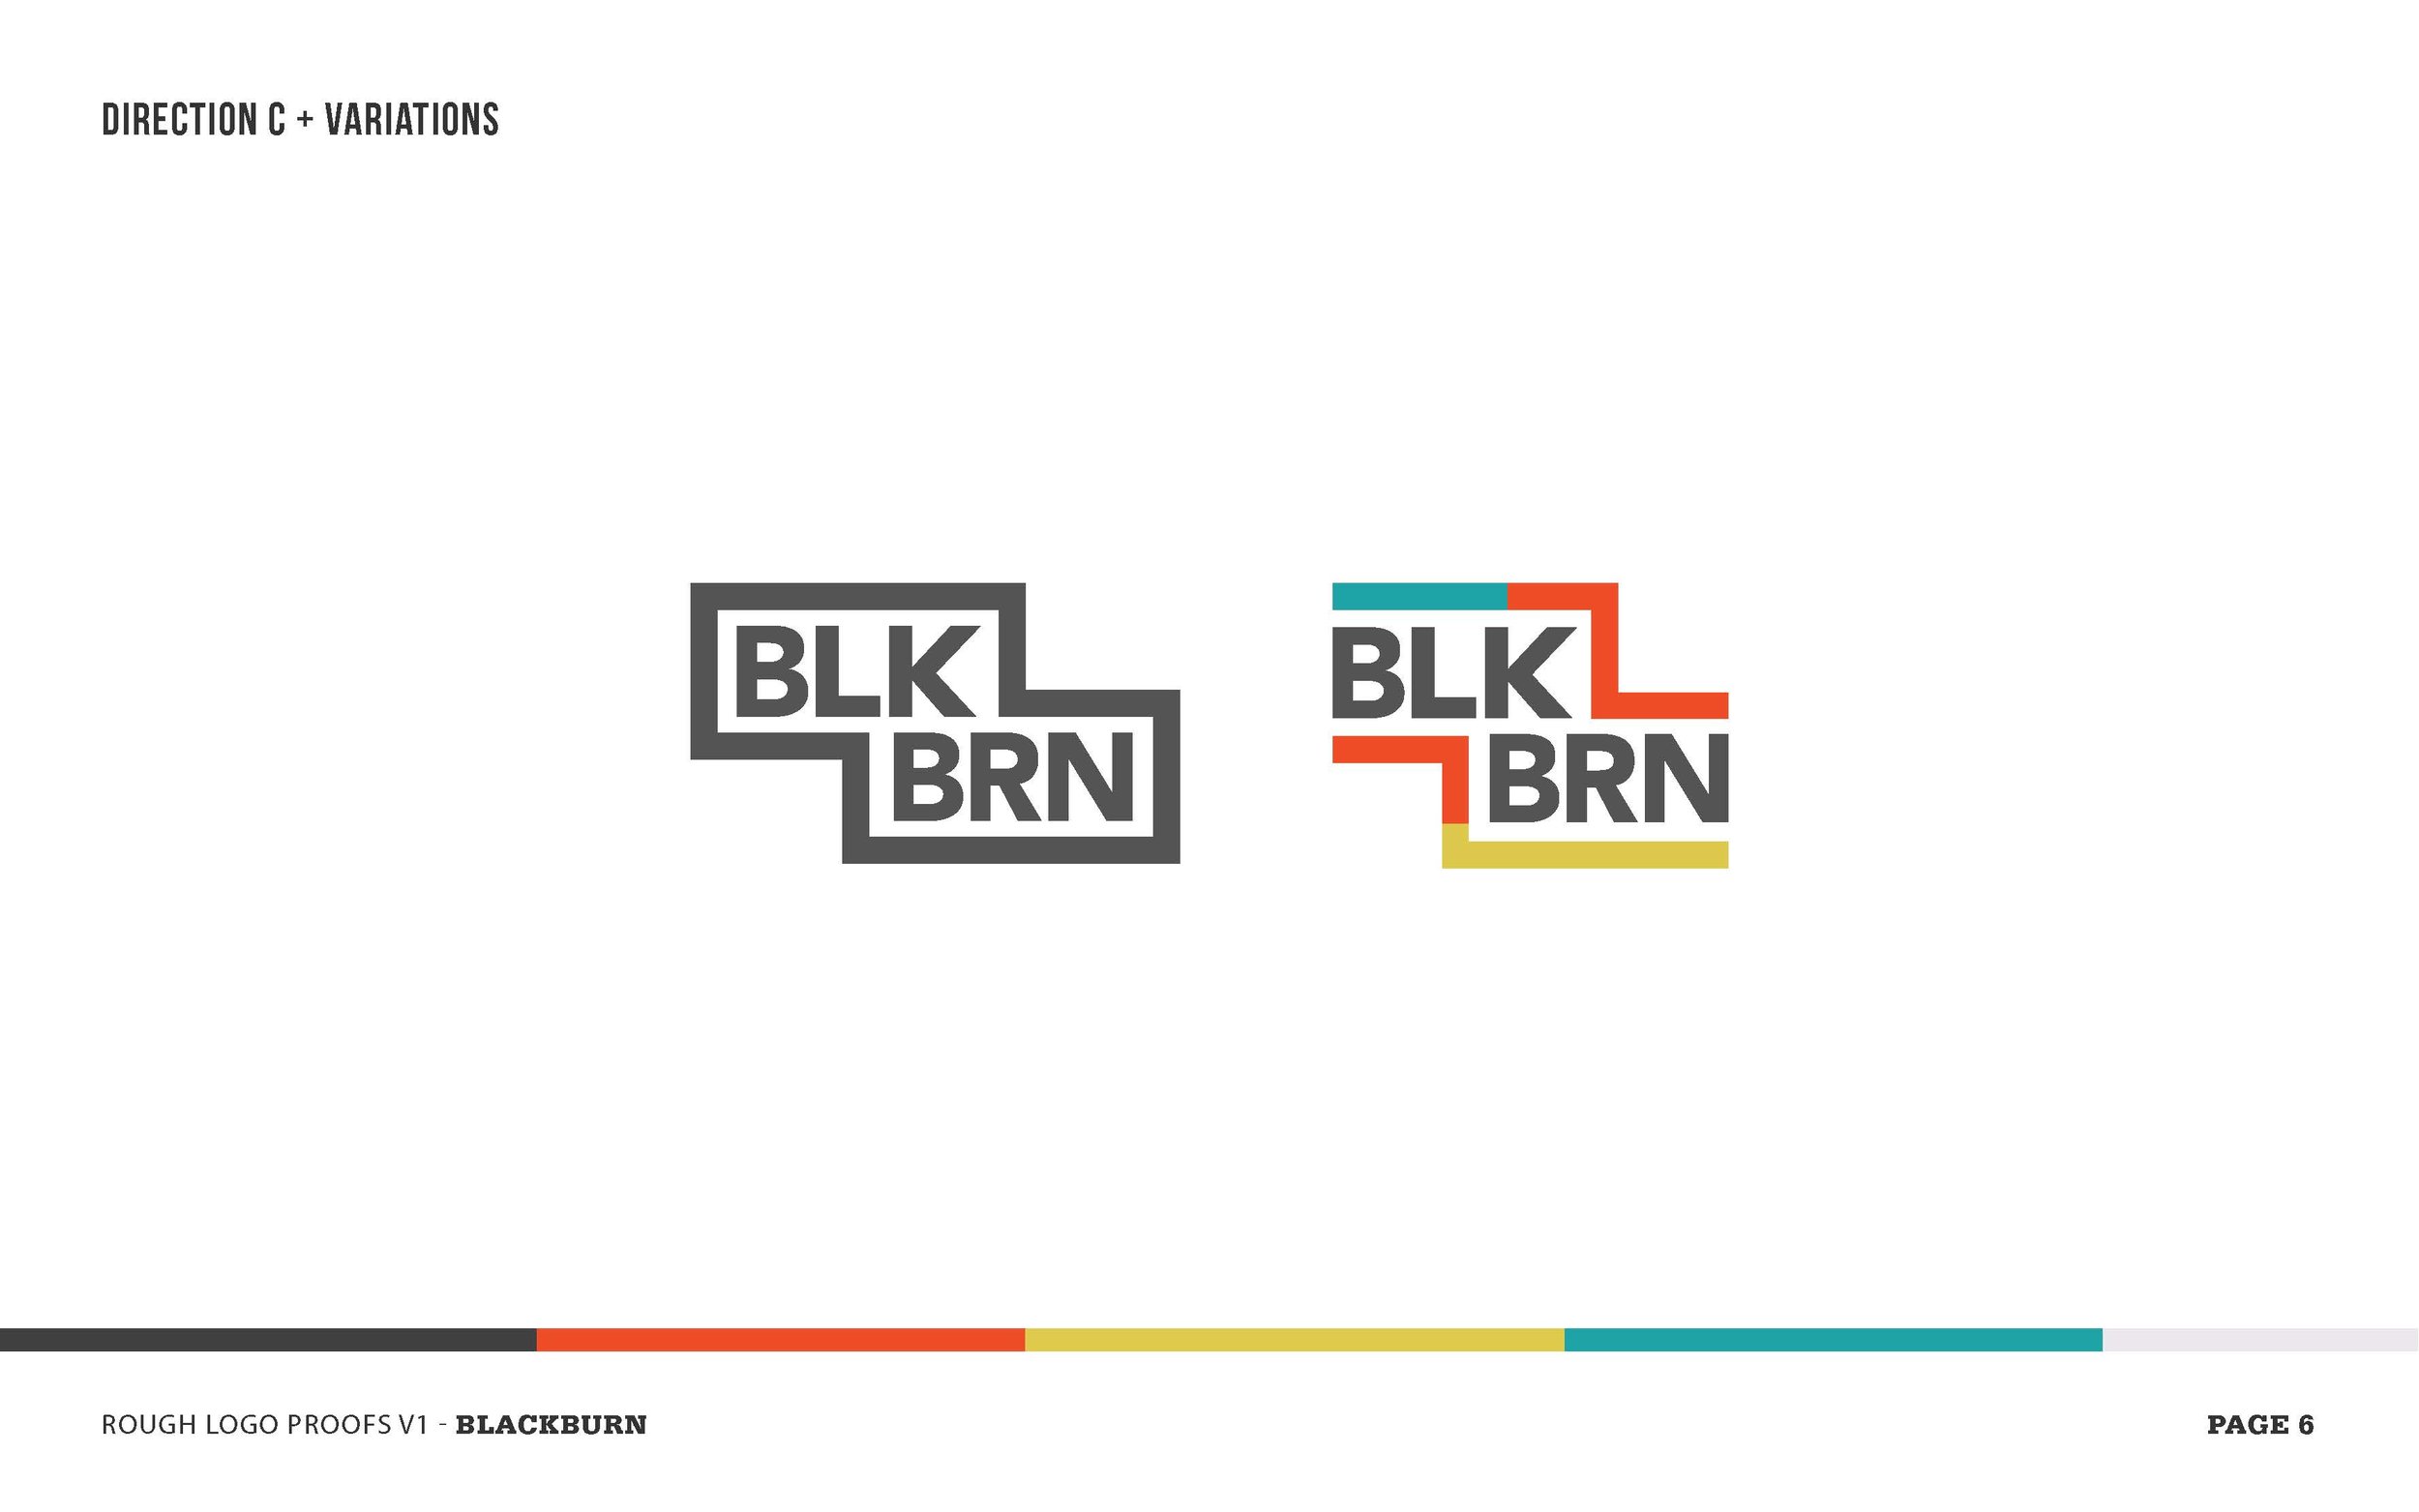 blkbrn-logo-rough-presentation-v1-max_Page_6.jpg